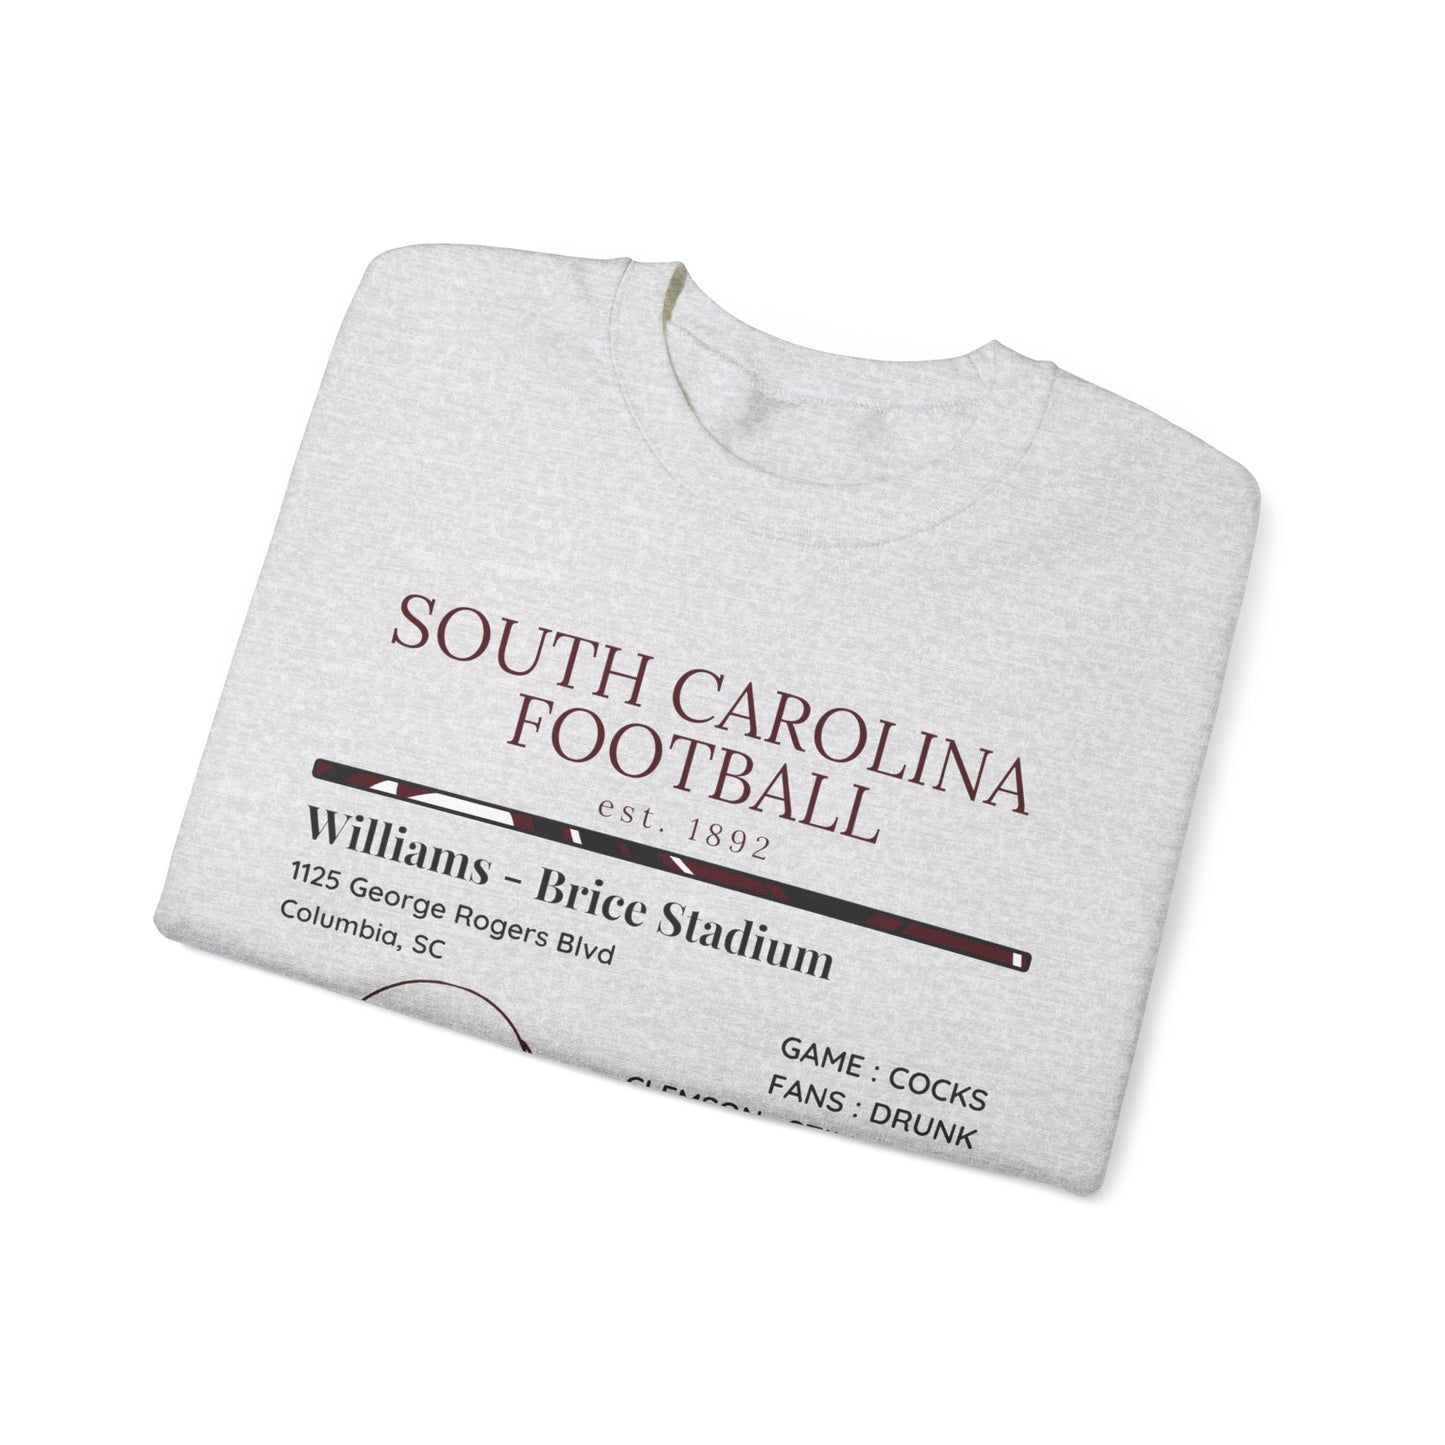 South Carolina Football Sweatshirt